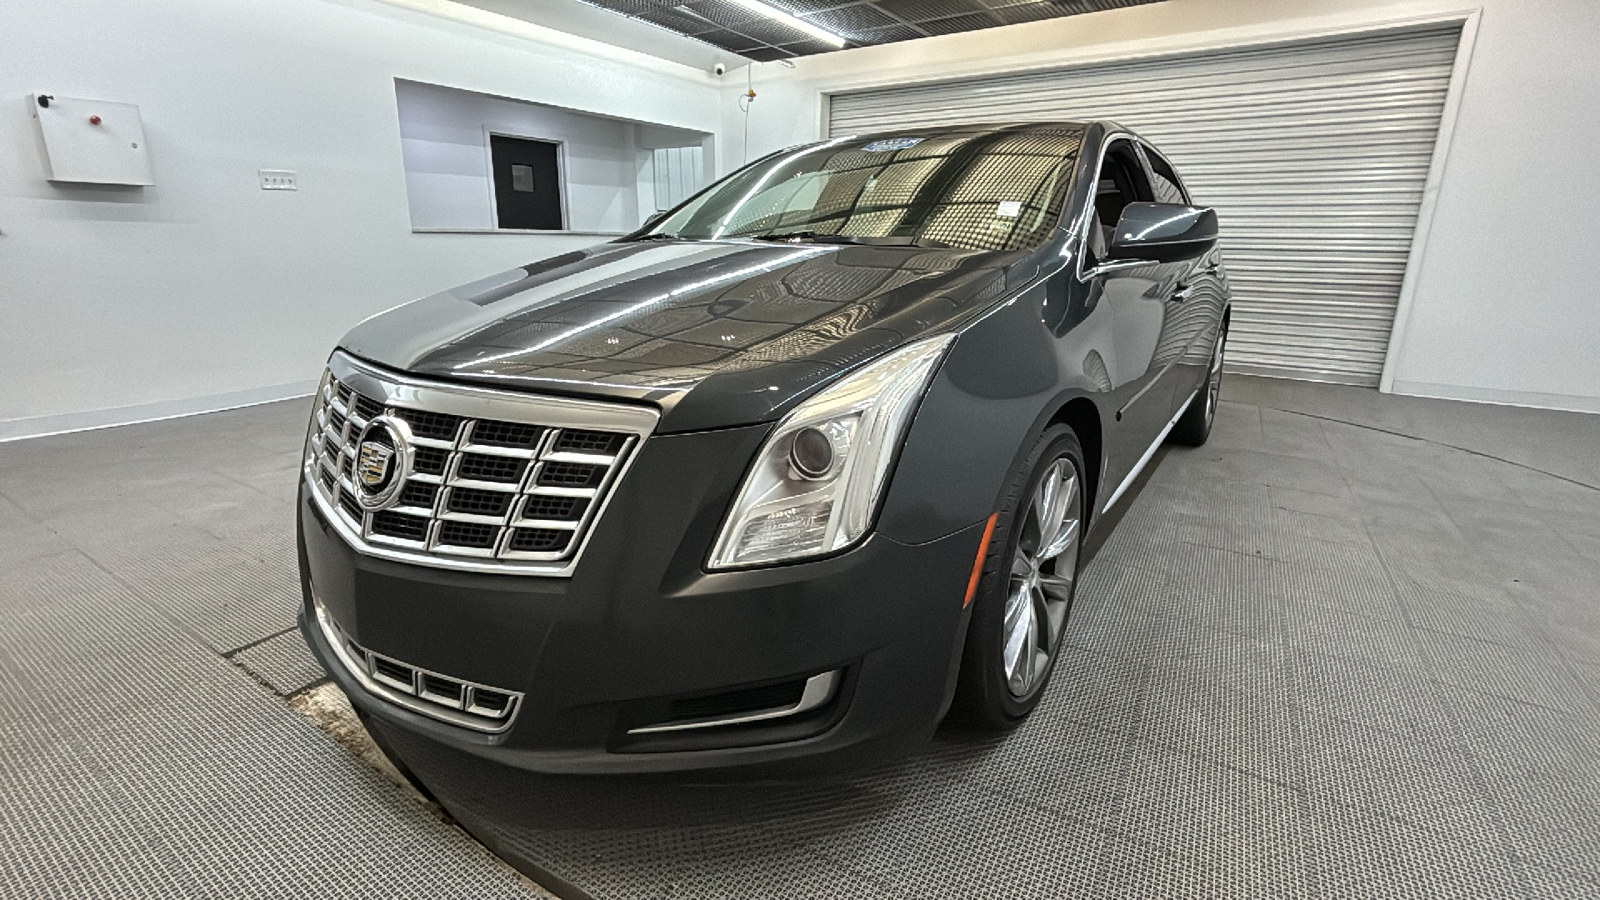 2013 Cadillac XTS Standard 7